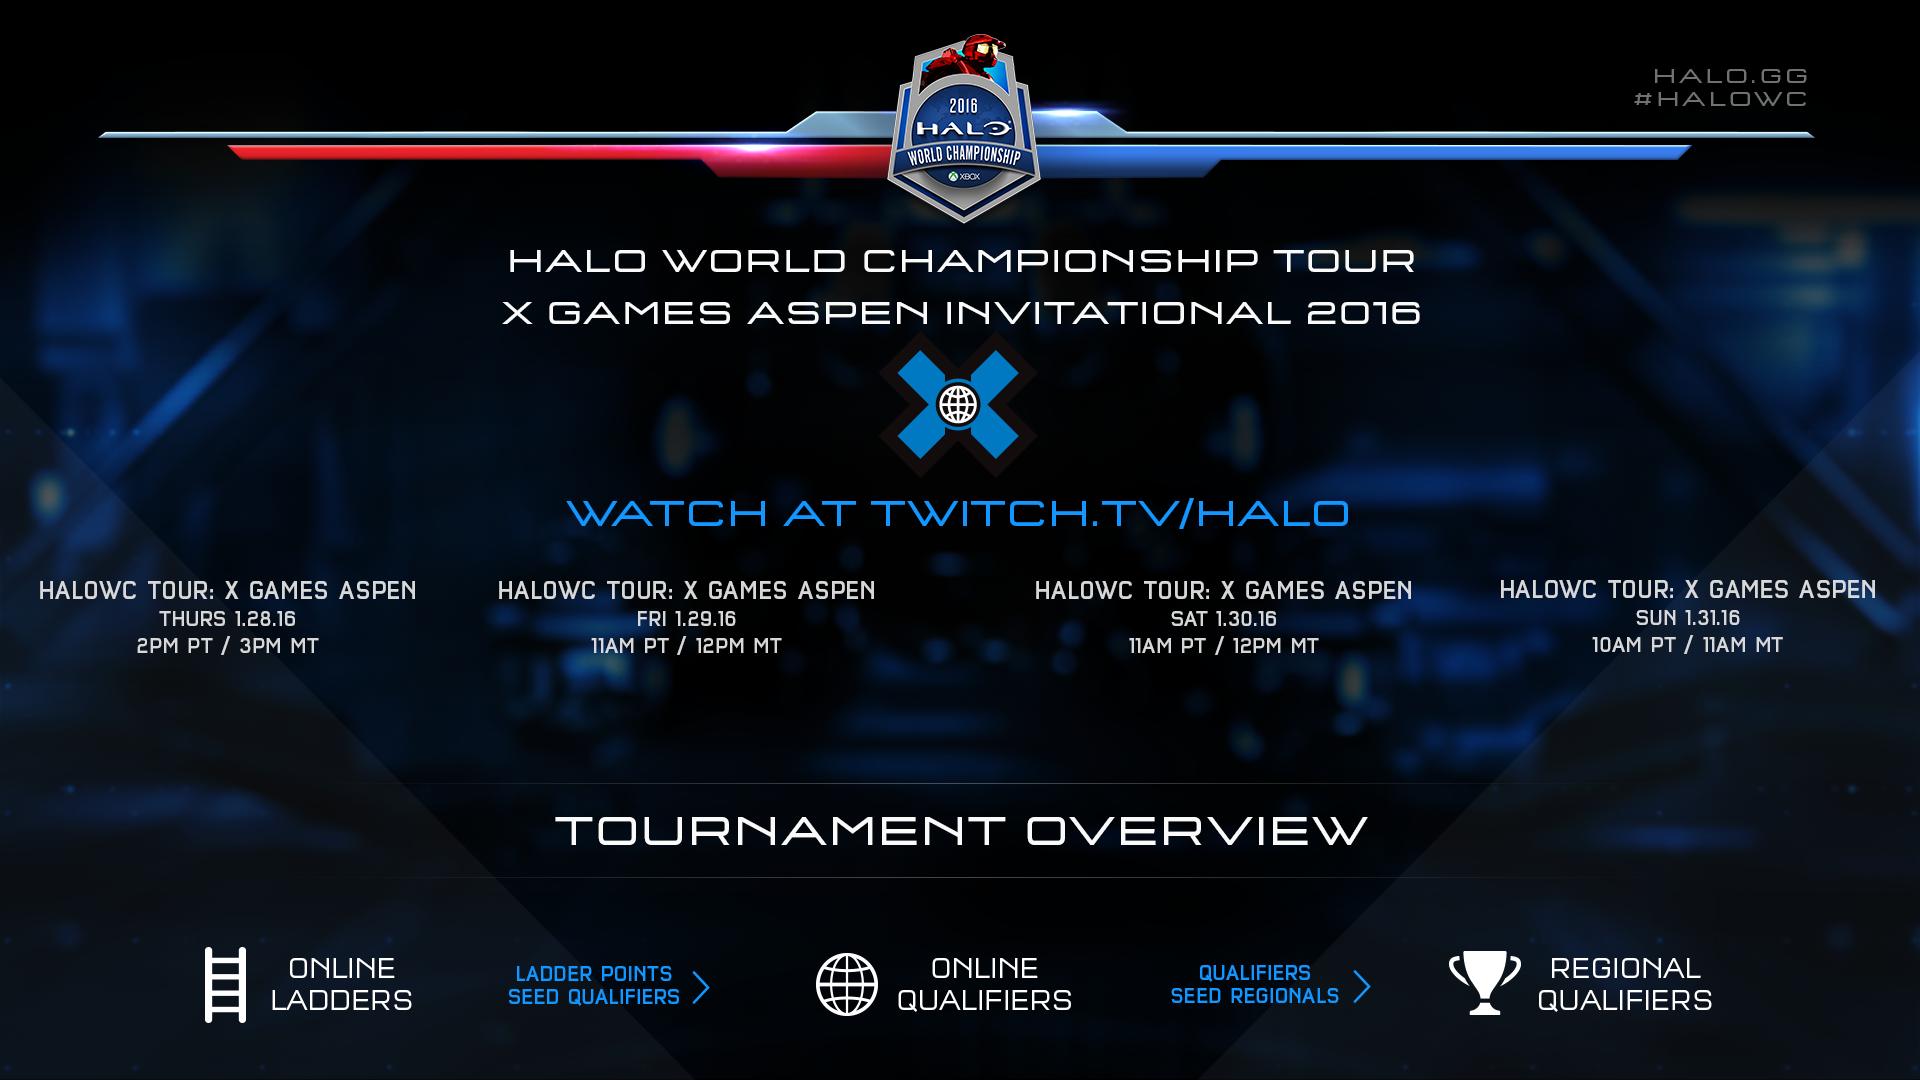 Halo World Champions tour 2016 schedule